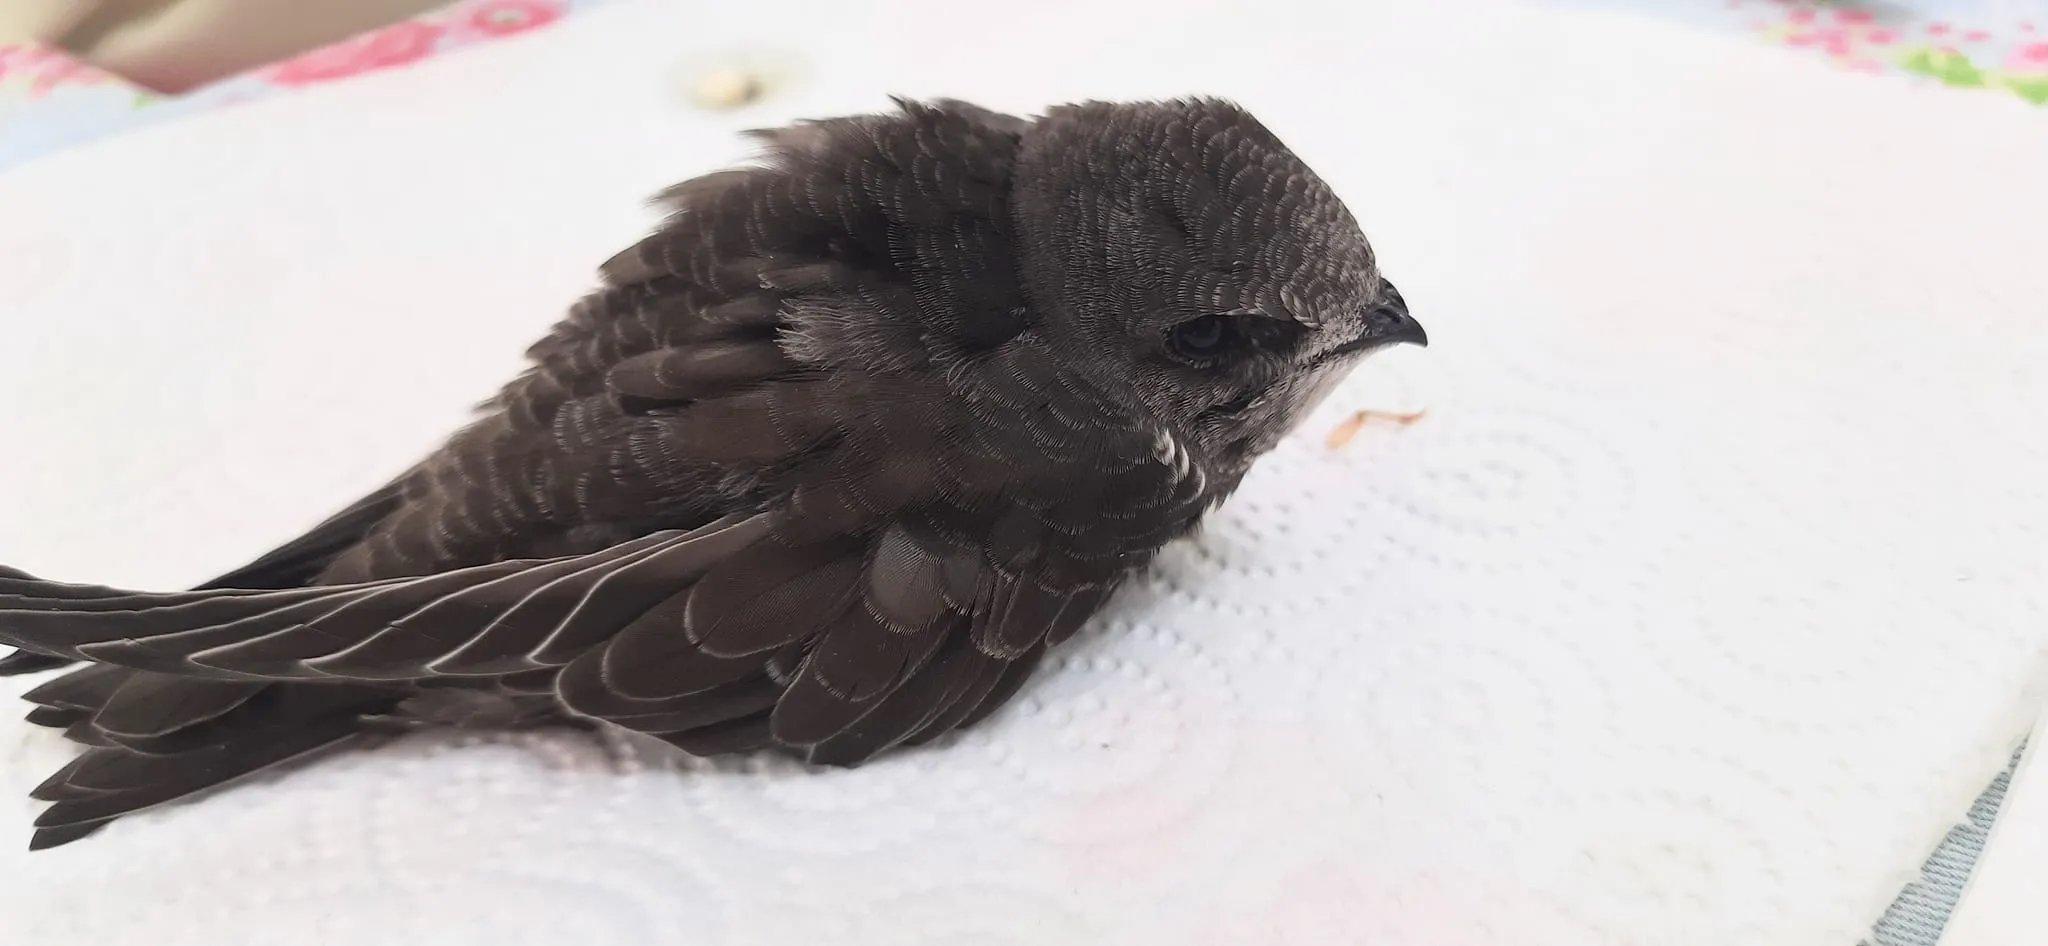 A Swift lying on kitchen towel.